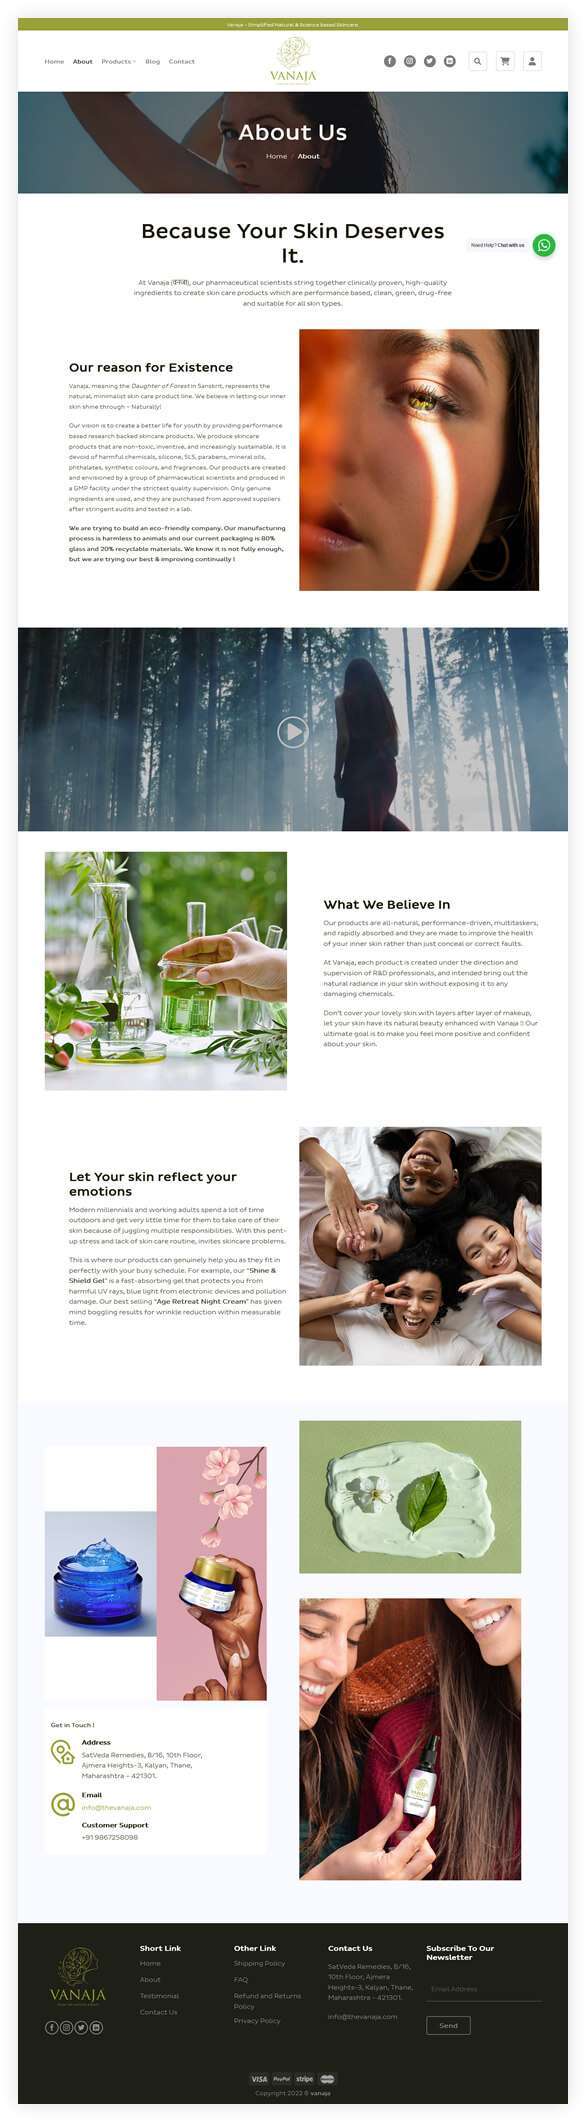 Ecommerce website for skin care brand